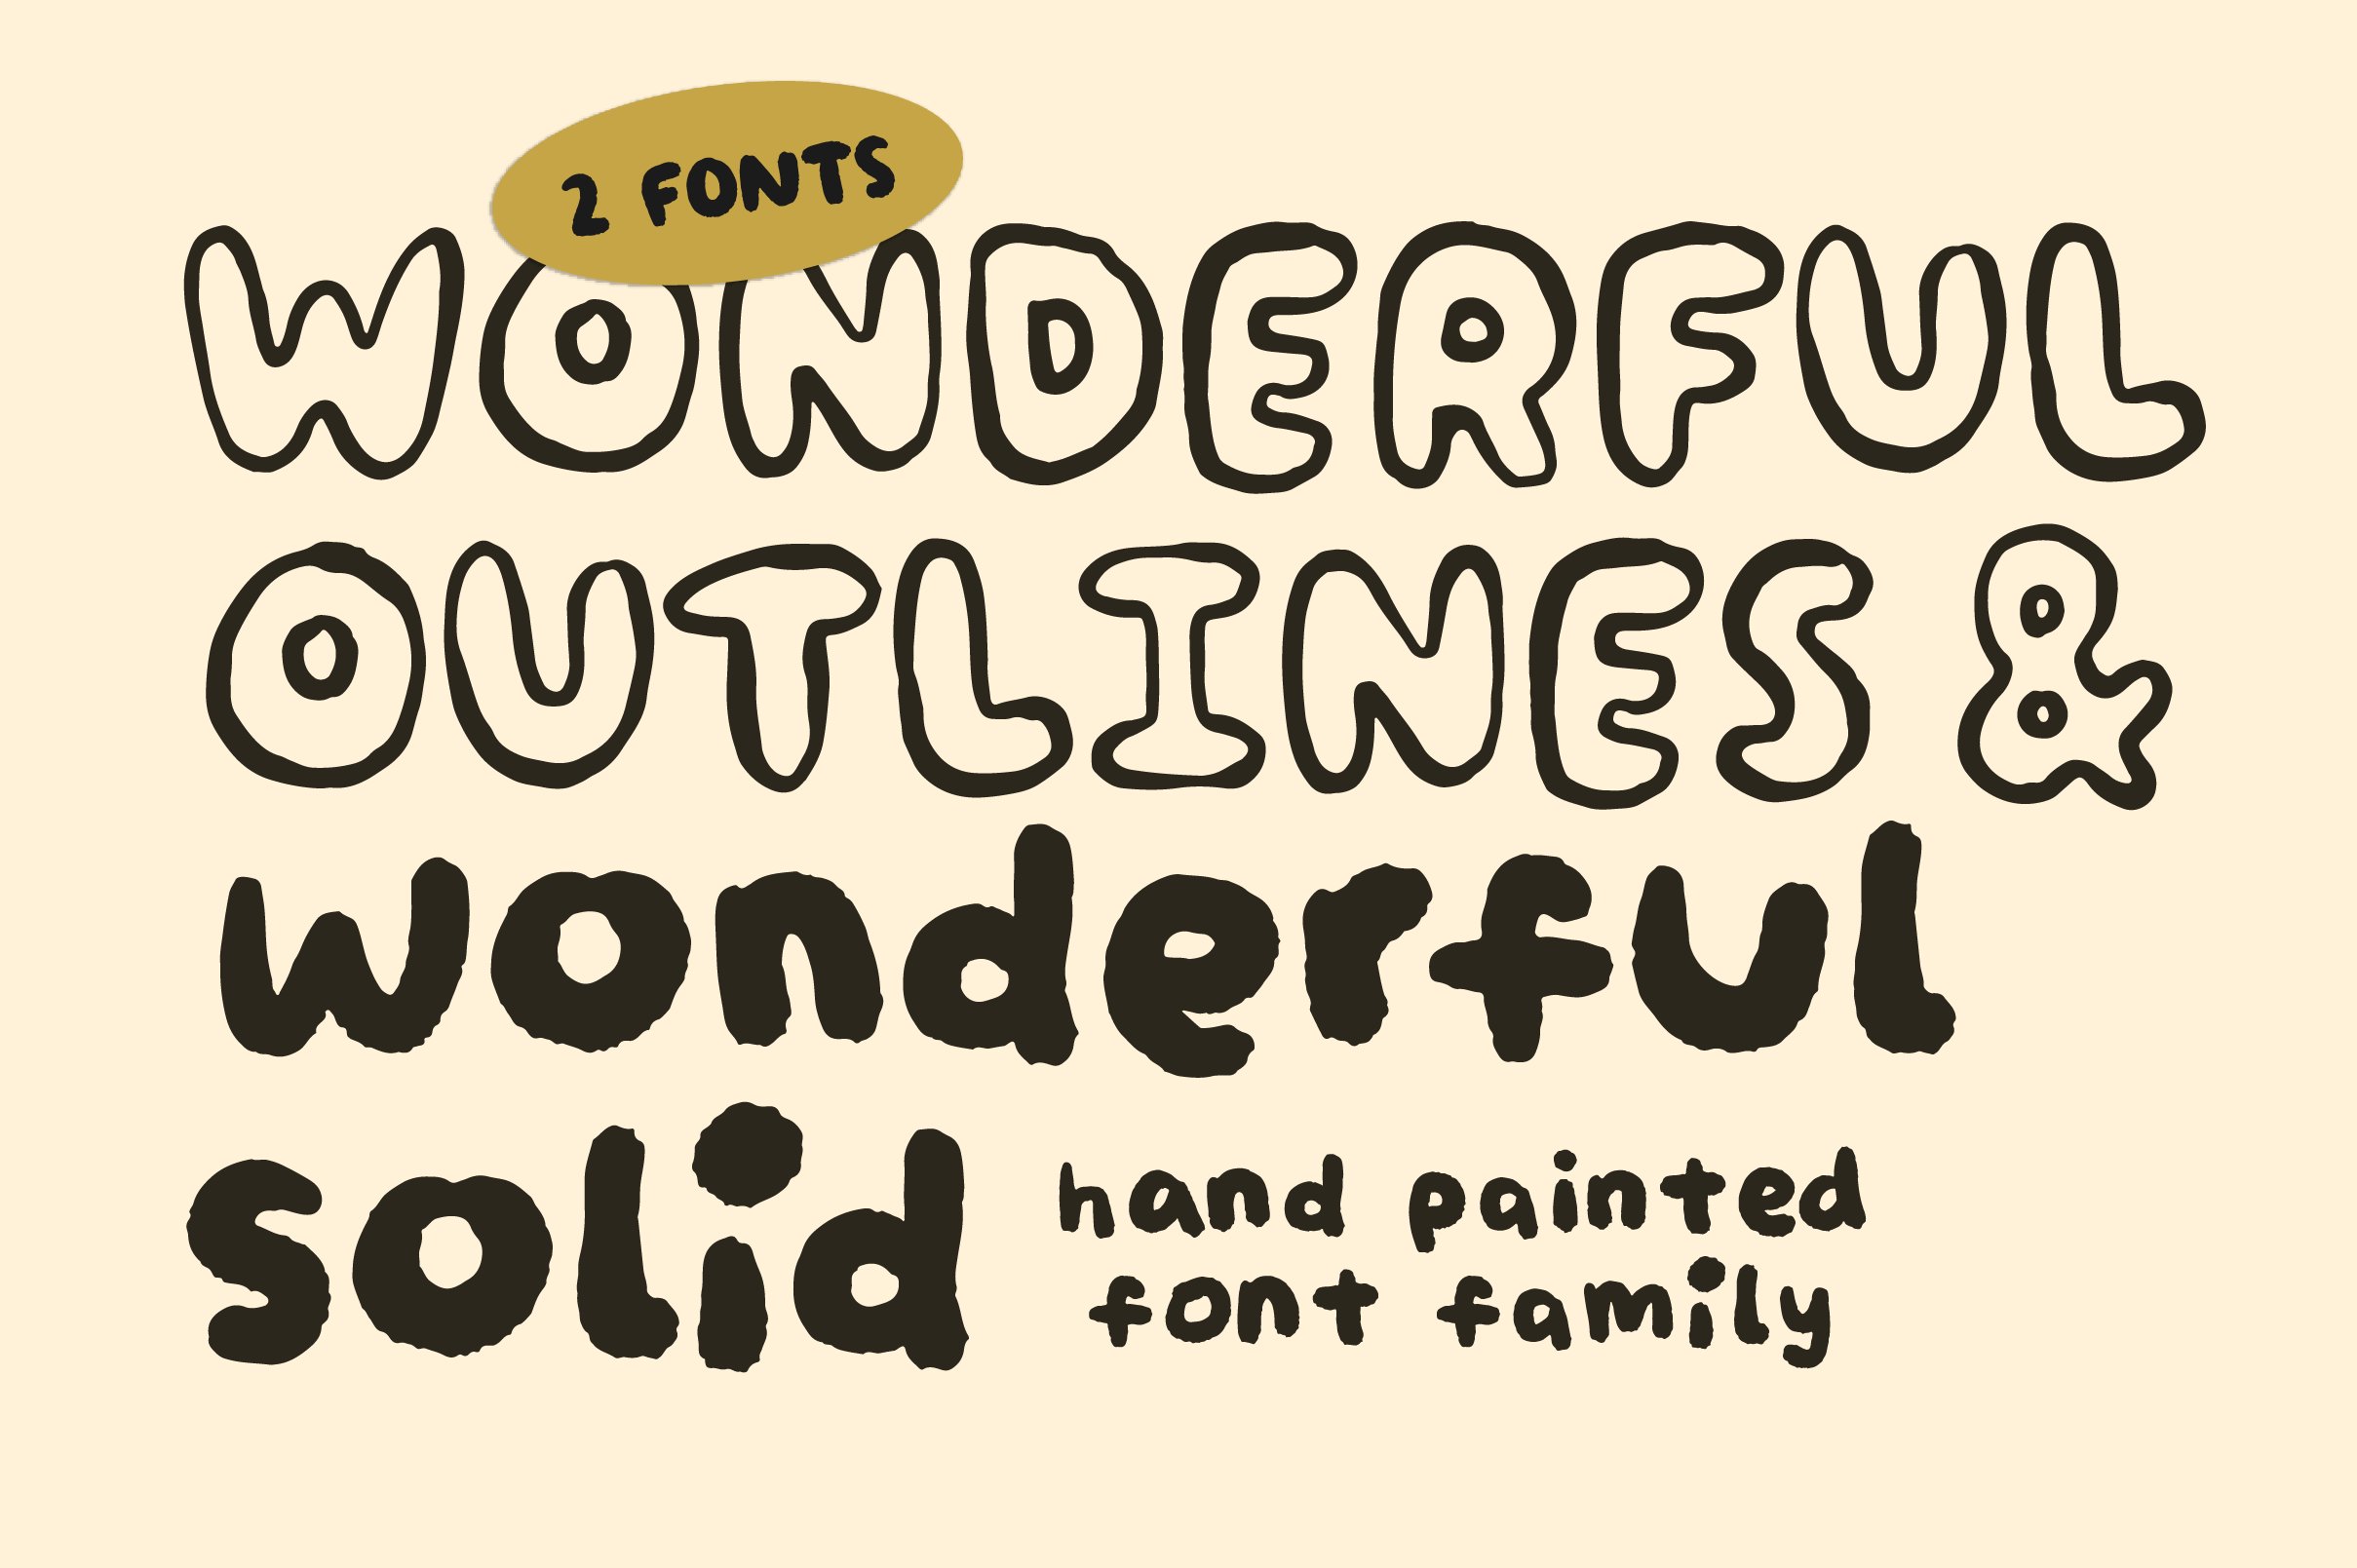 2 Fonts: Wonderful Handwriting cover image.